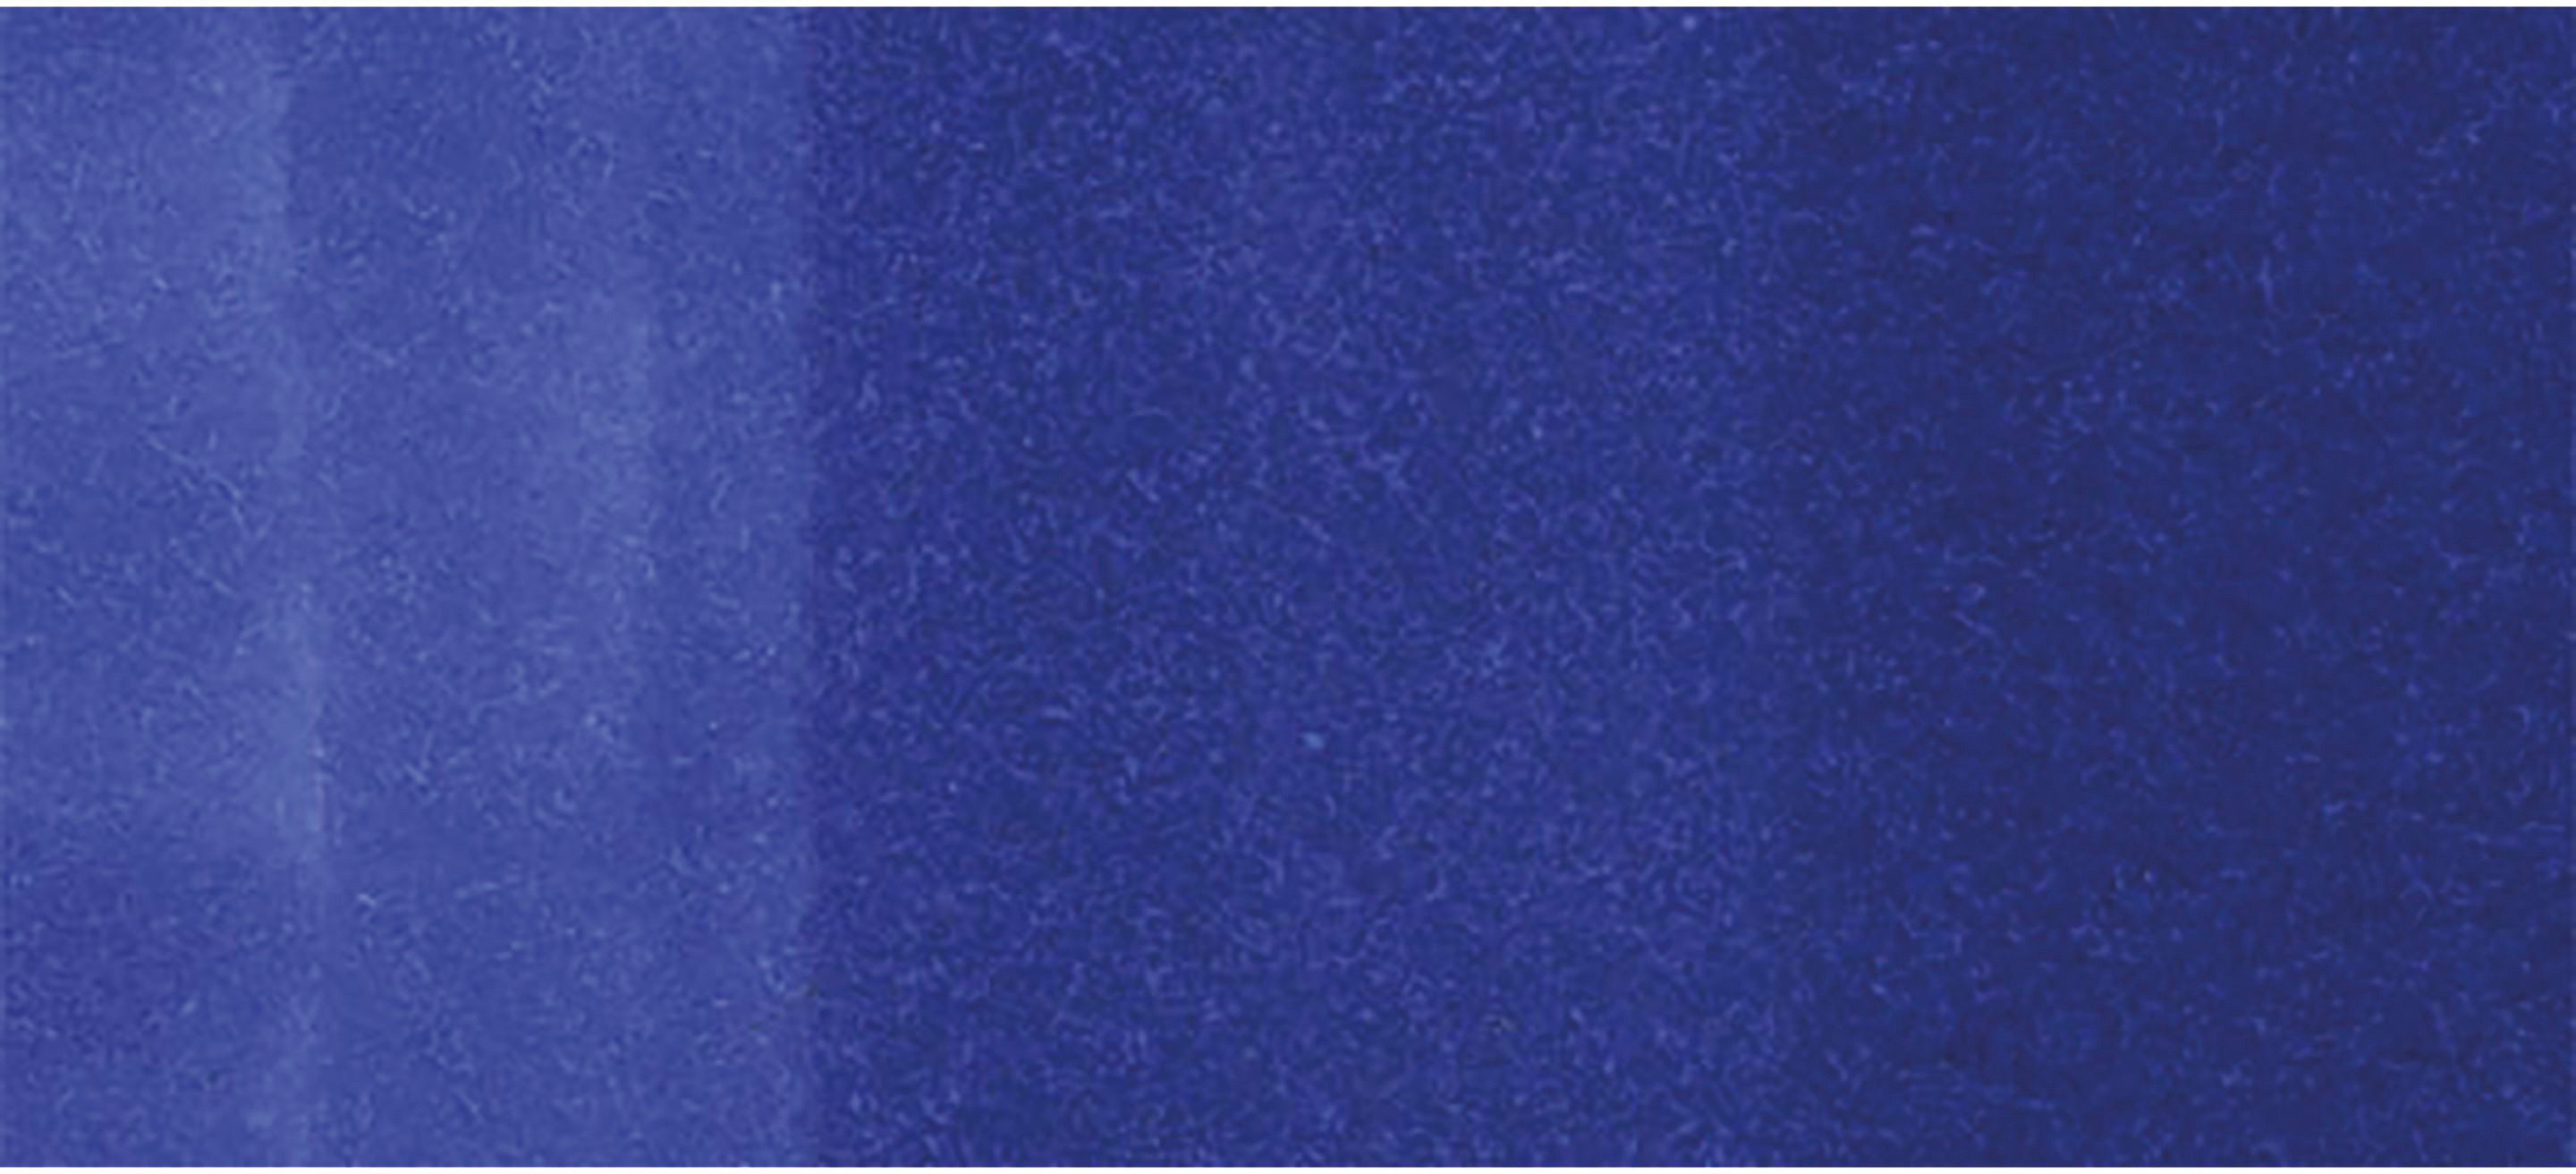 COPIC Marker Classic 2007576 B26 - Cobalt Blue